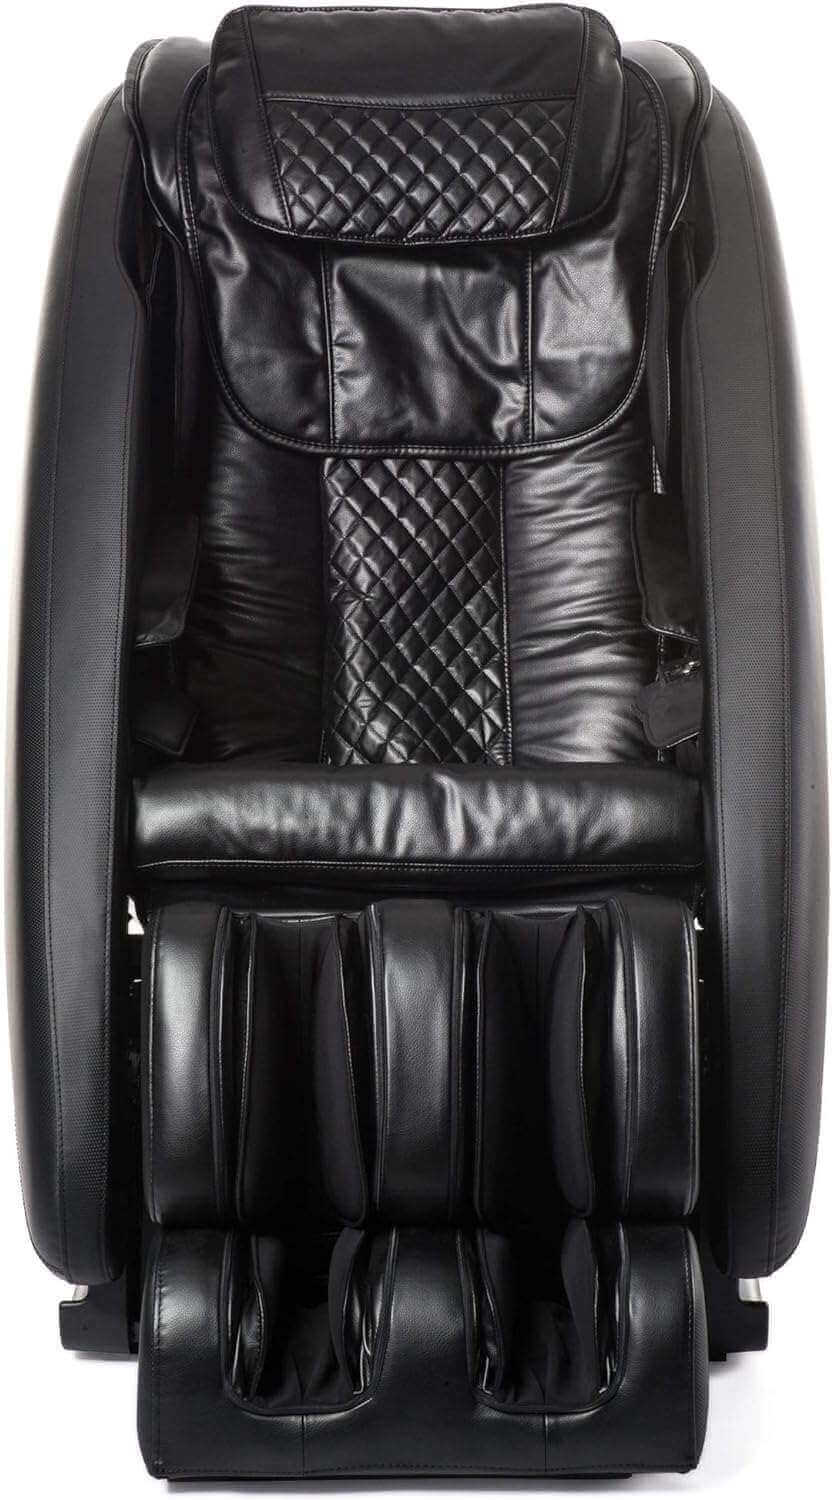 Inner Balance Ji - SL Track Heated Deluxe Zero Gravity Massage Chair - Electric Massaging Chairs